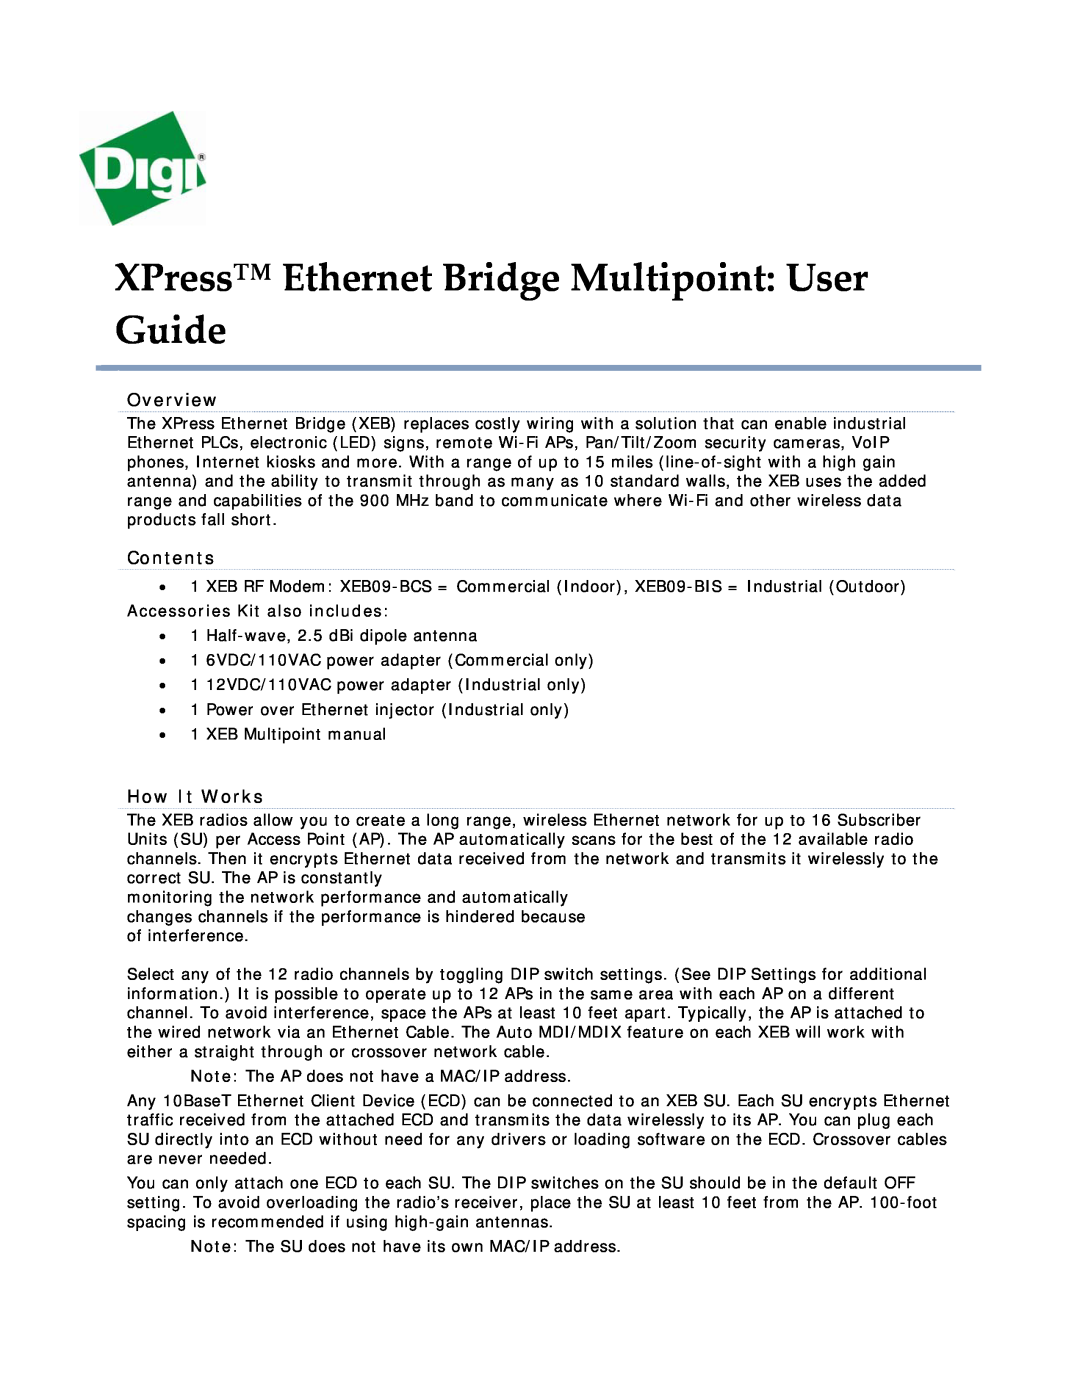 Digi XEB09-BCS manual Overview, Contents, How It Works, XPress Ethernet Bridge Multipoint User Guide 